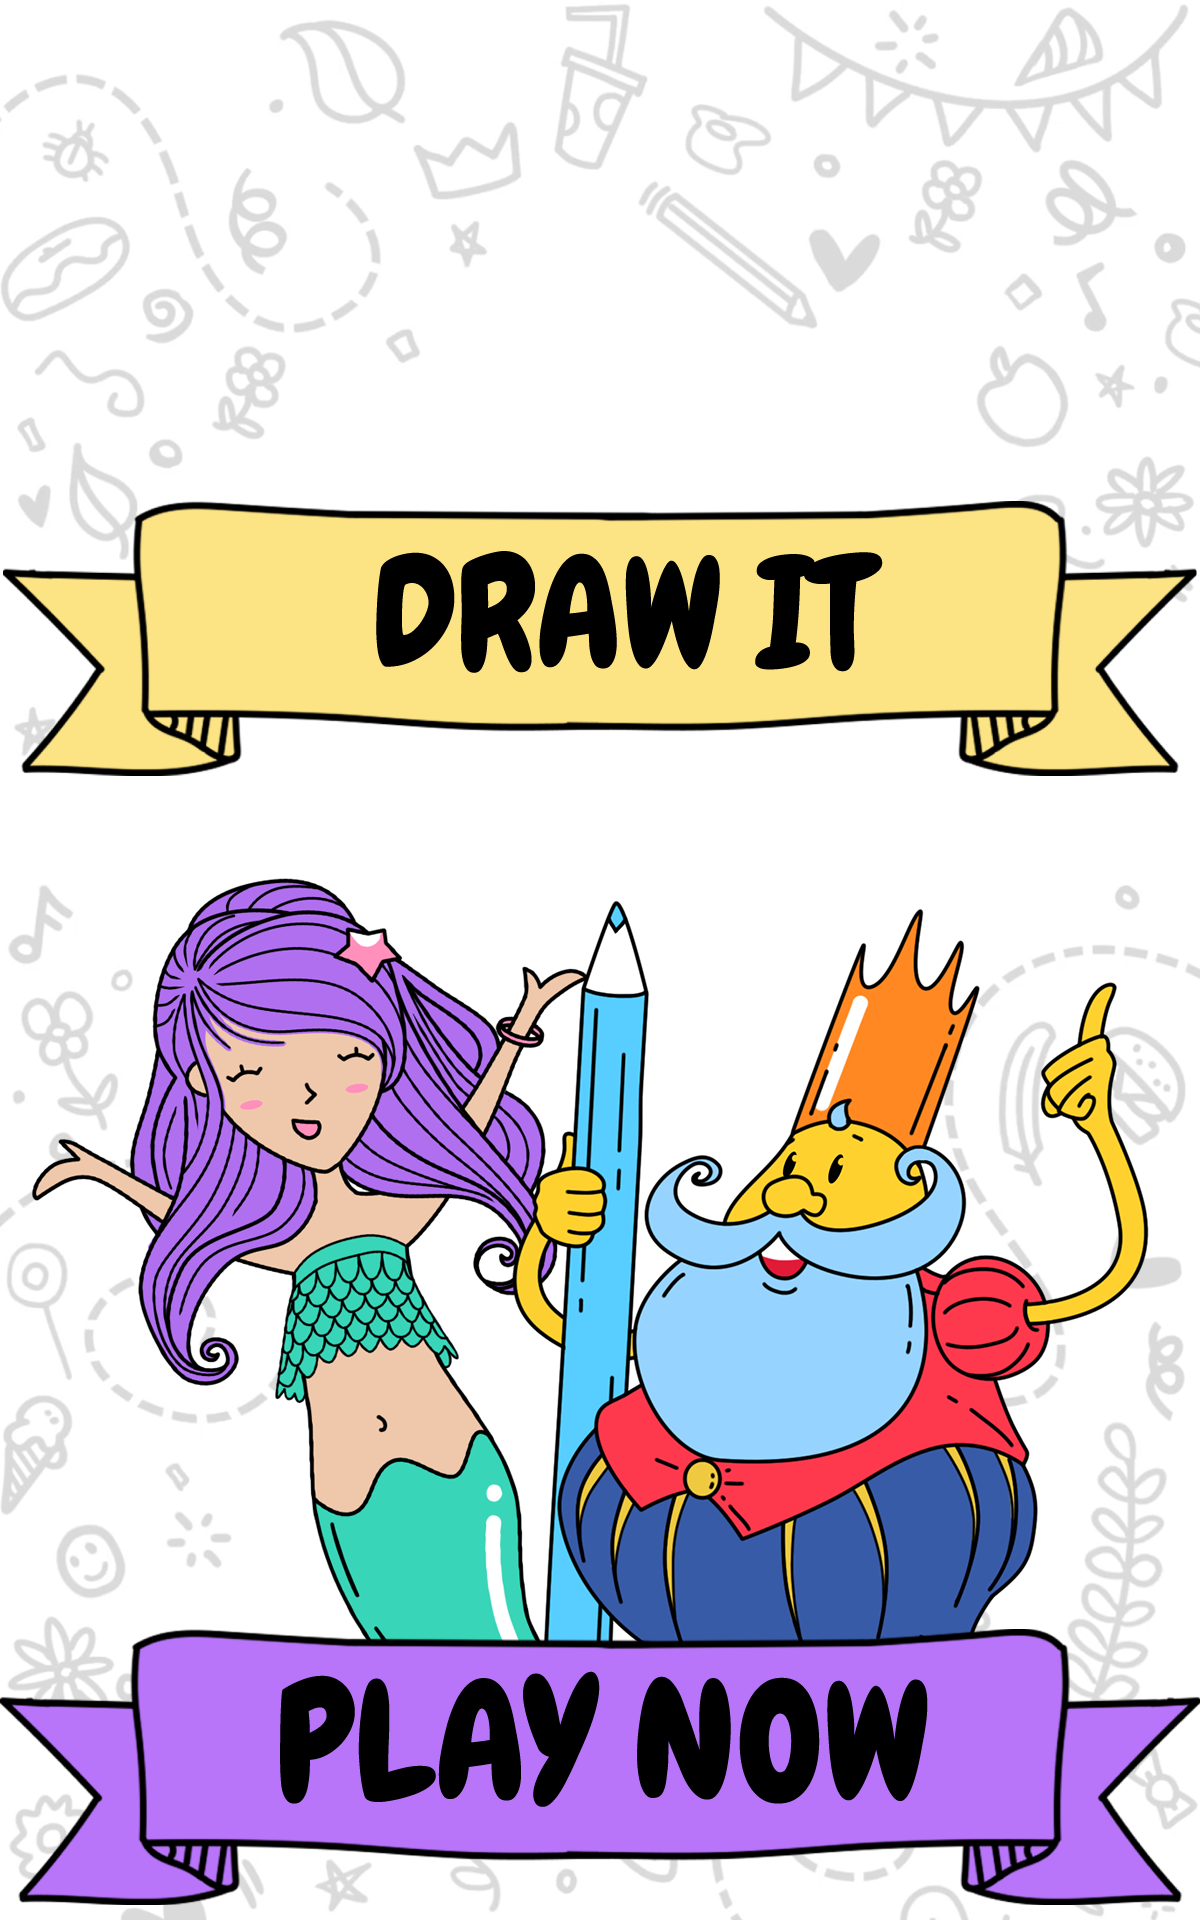 Draw it screenshot game